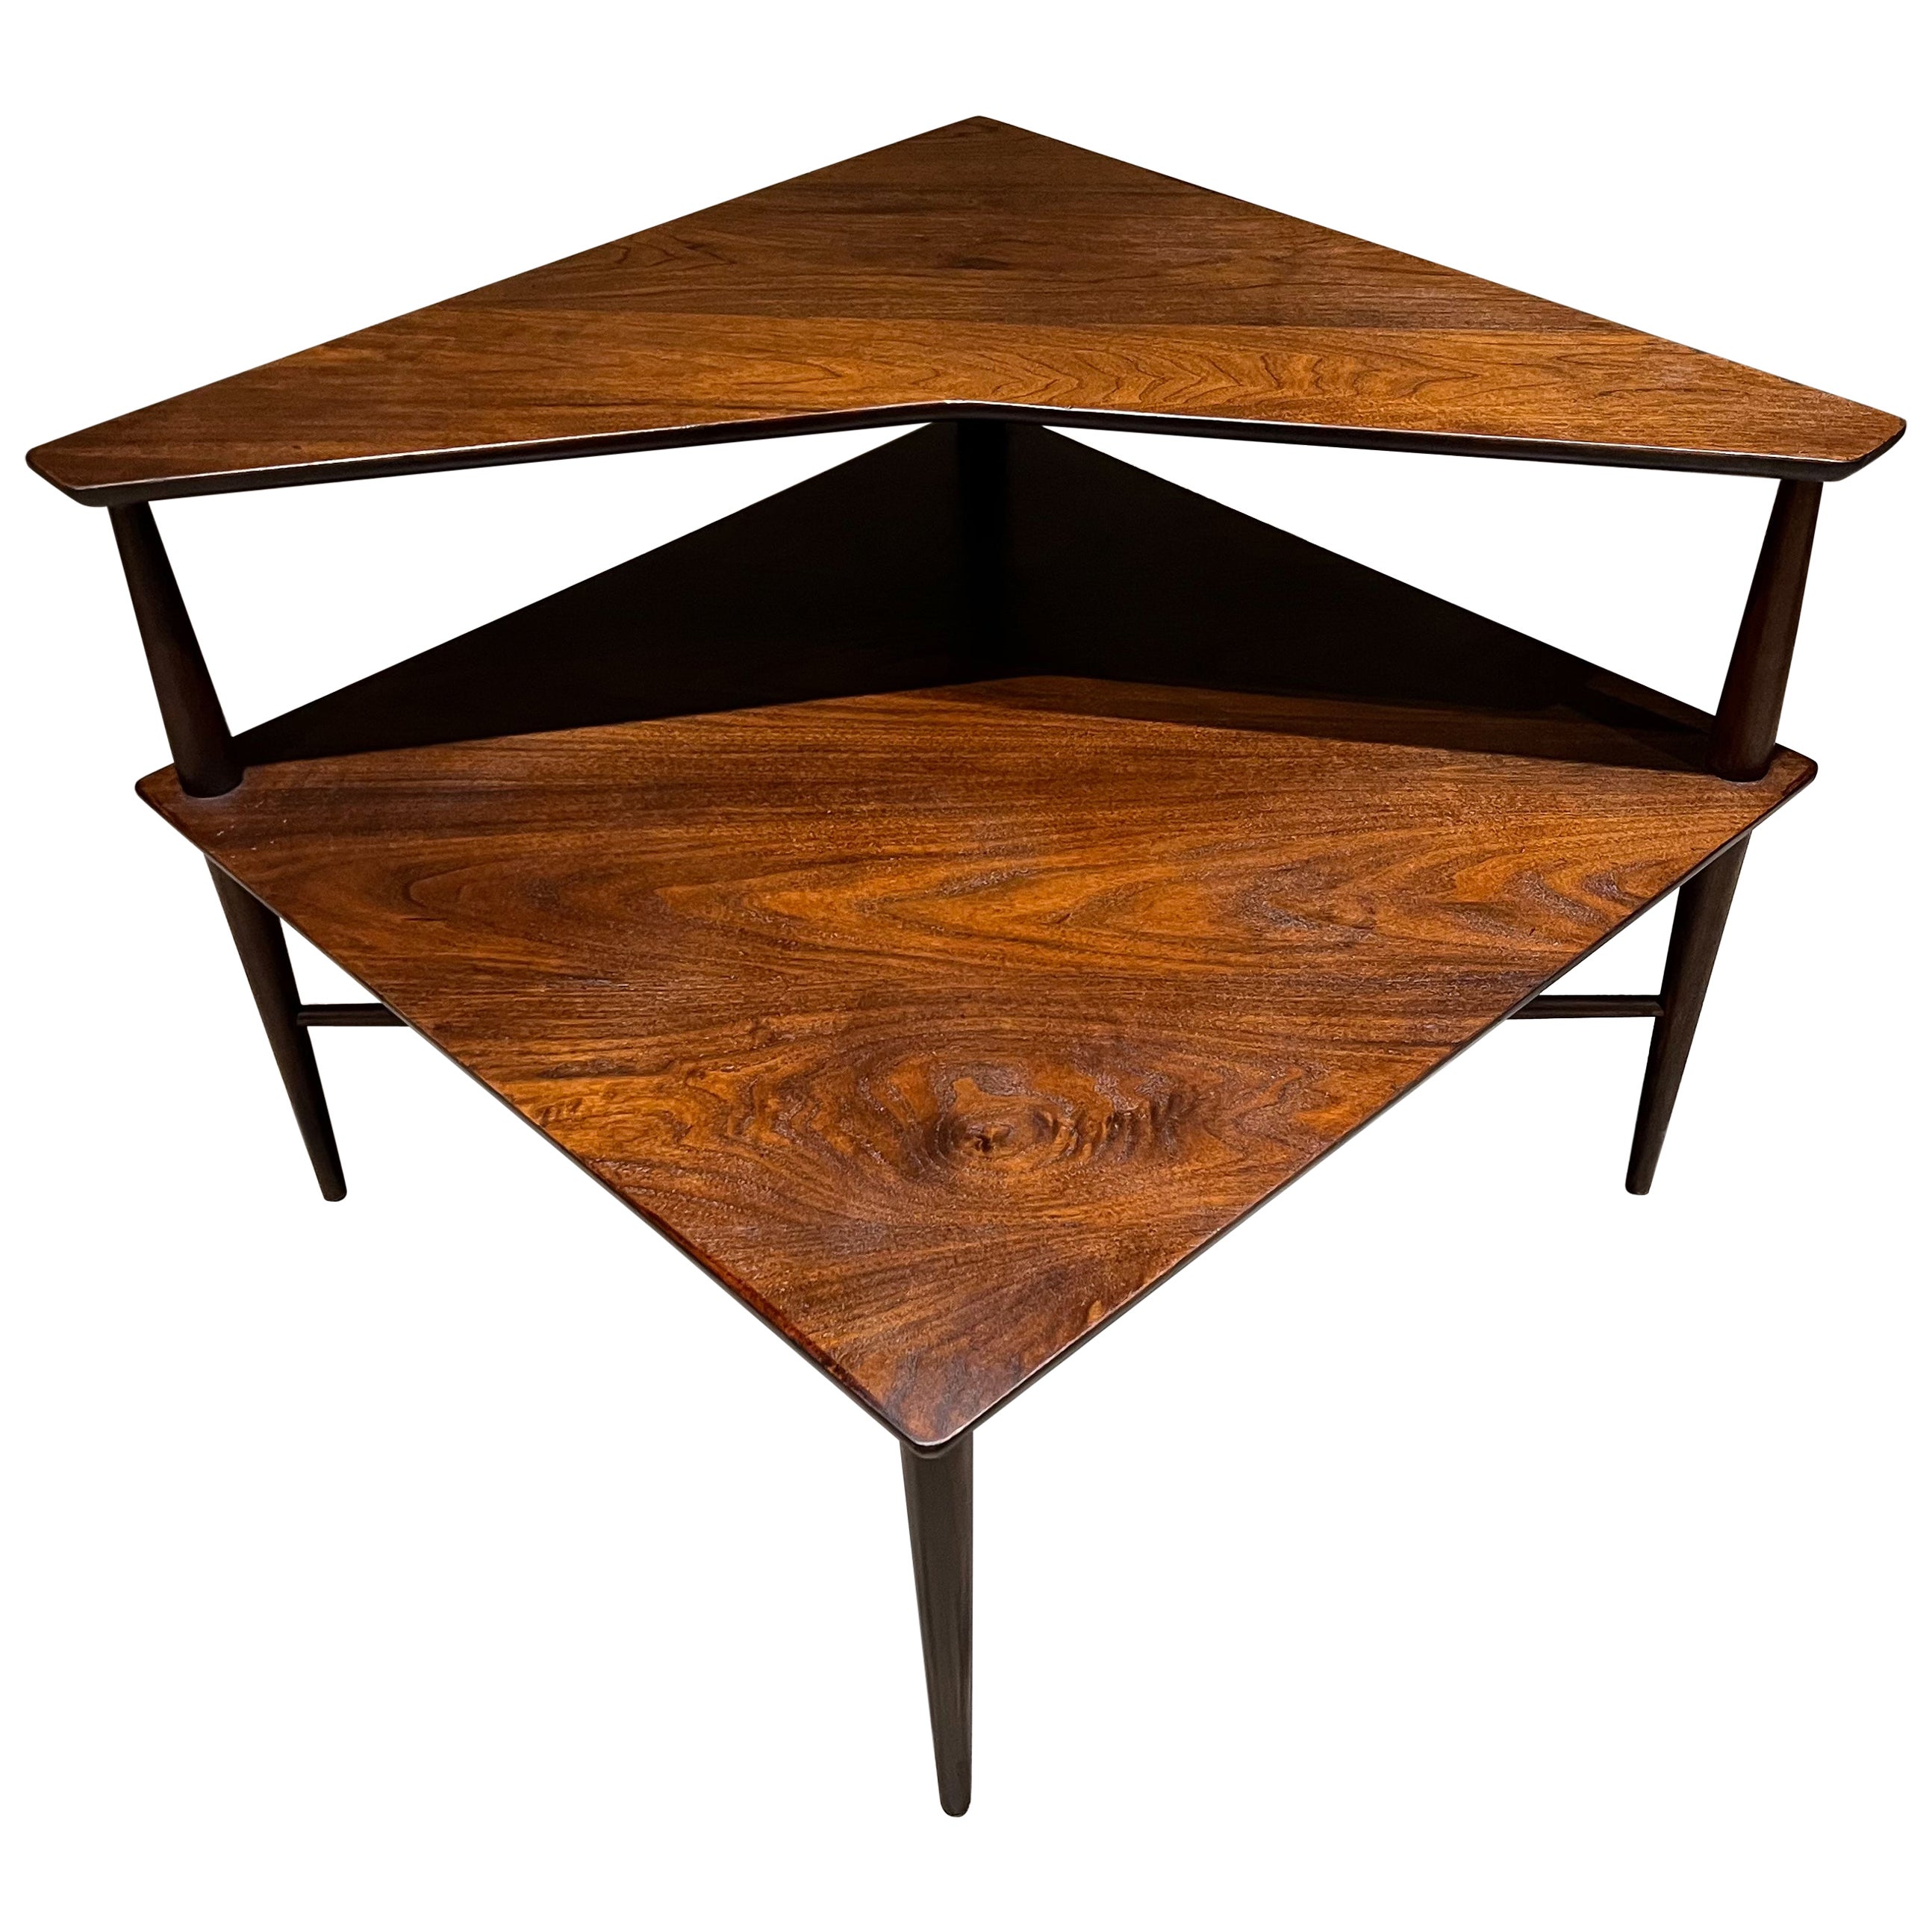 1950s Stylish Heritage Henredon Tiered Corner End Table in Walnut Wood